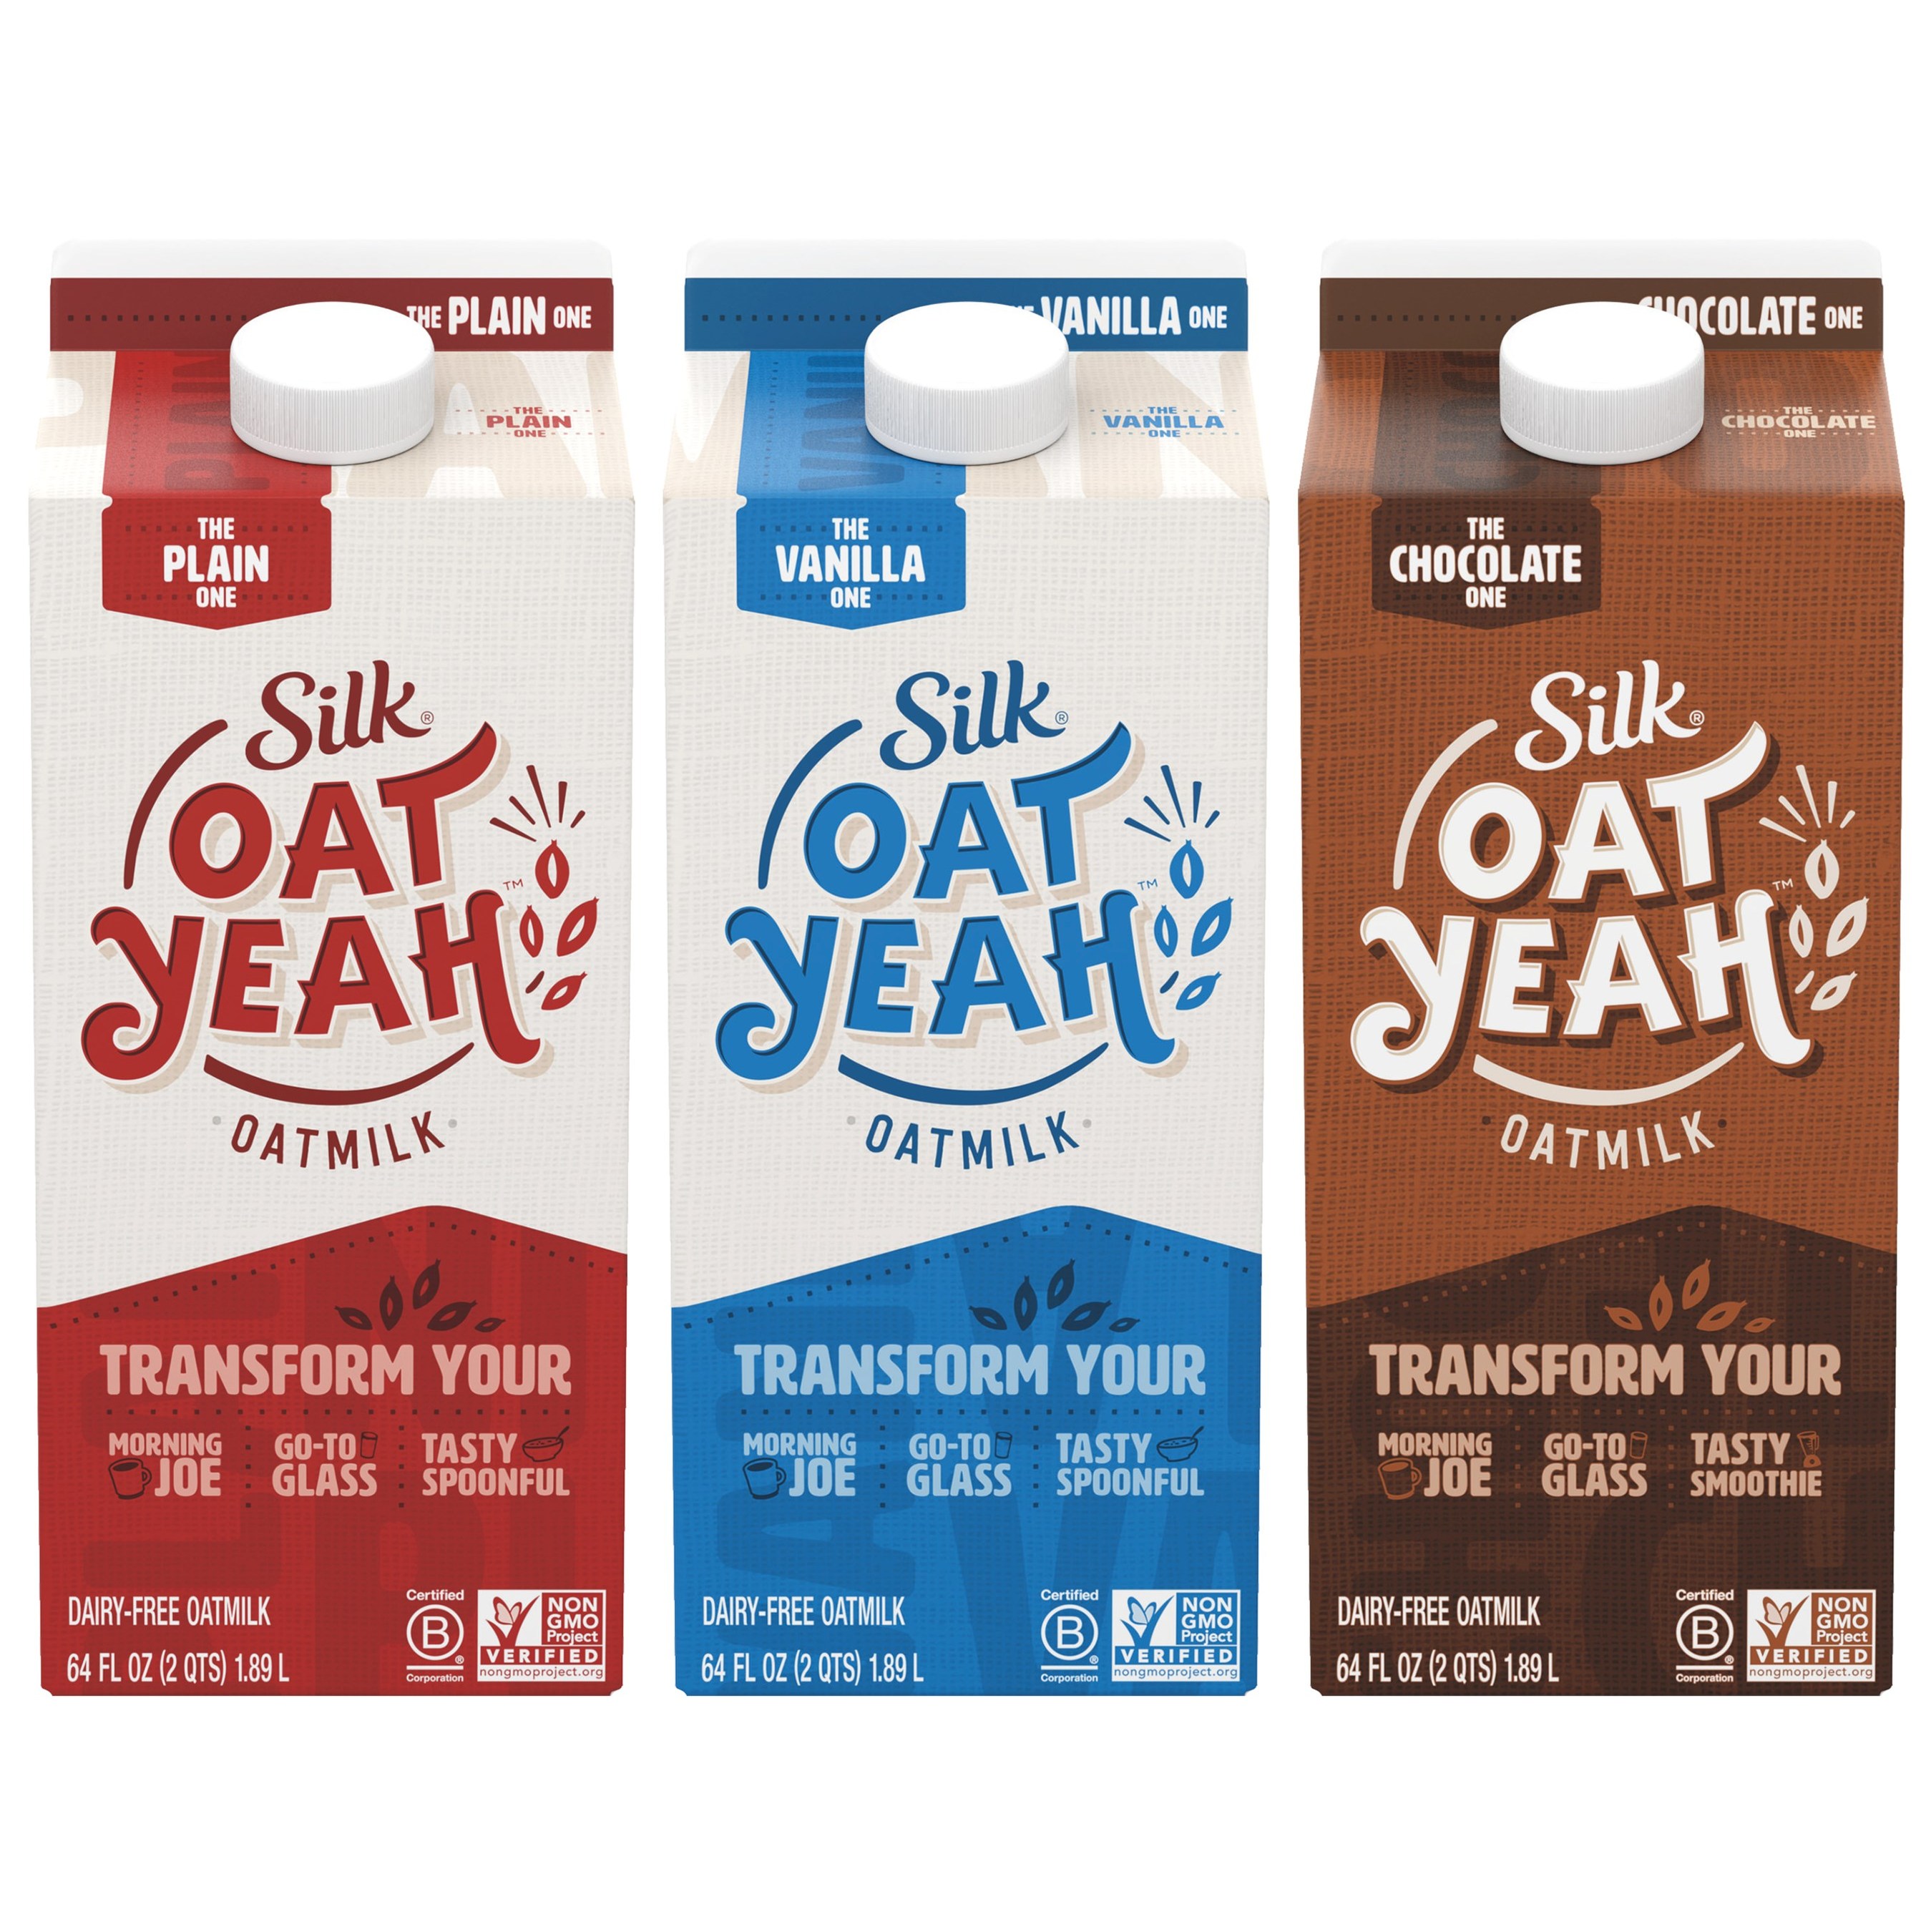 /PRNewswire/ -- America's No. 1 plant-based milk brand, Silk®, is prou...